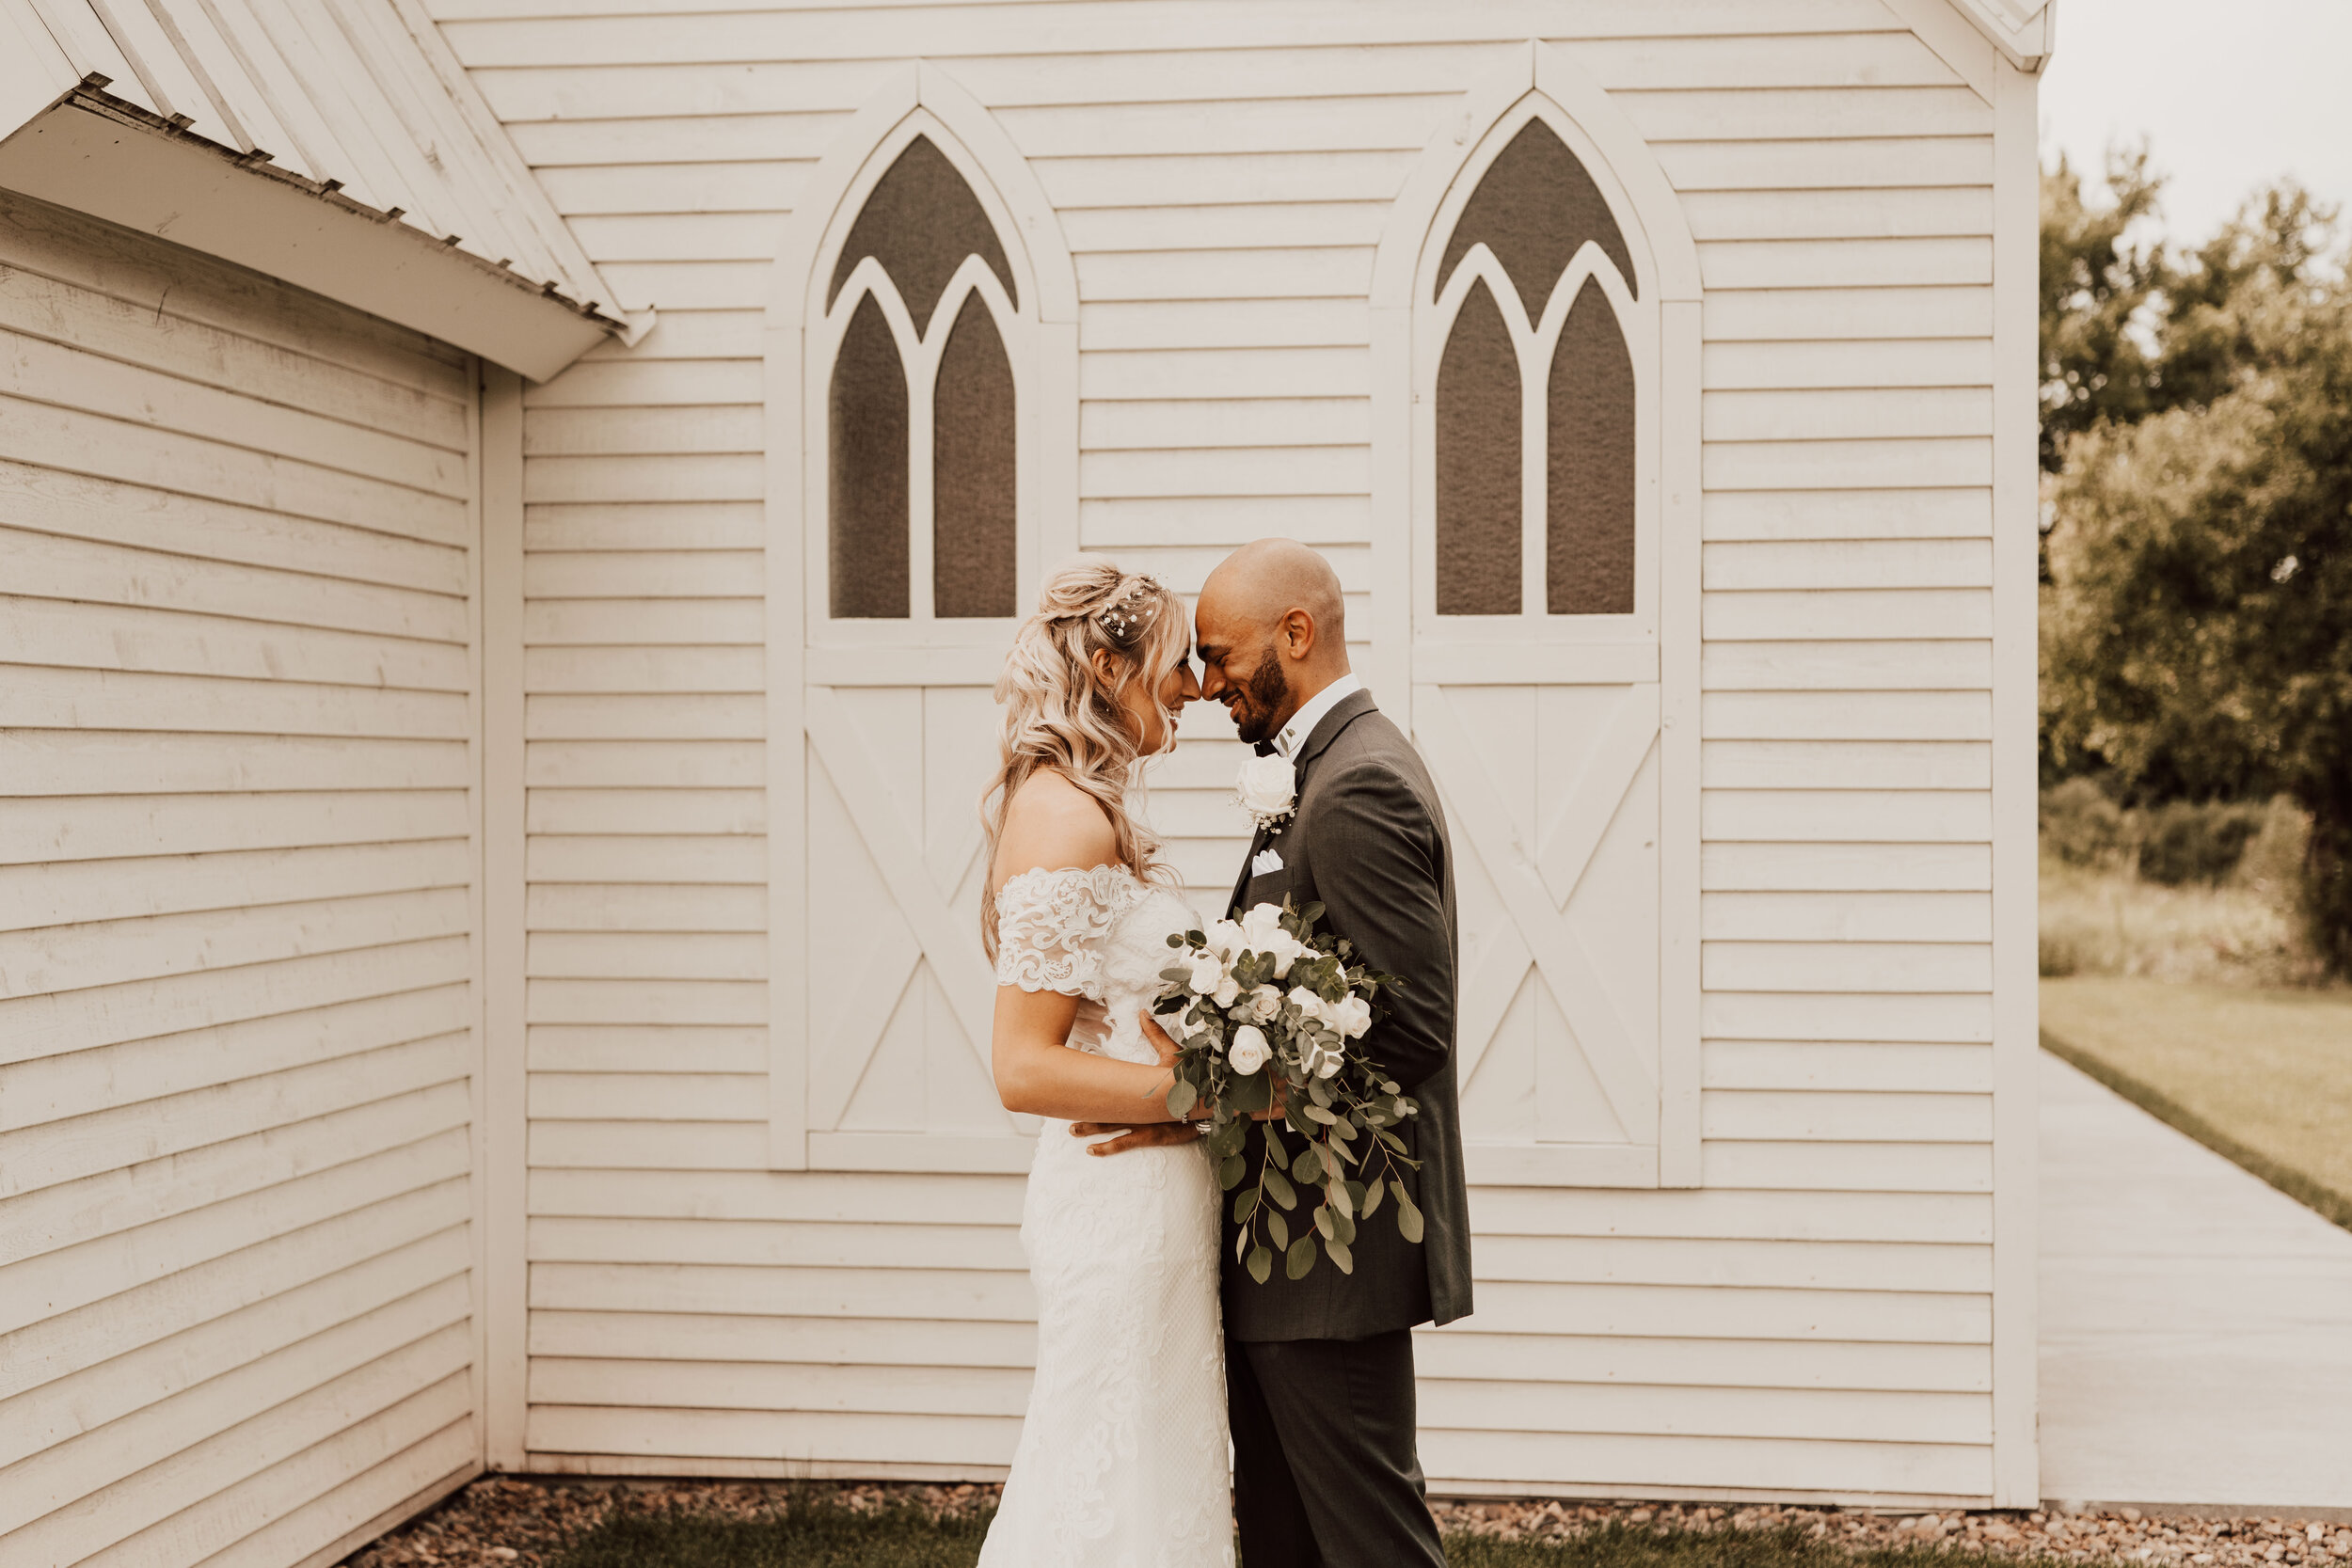 Hayley + Lorenzo - Summer White Chapel Wedding at Stone Hill Barn in Augusta, Kansas83.jpg